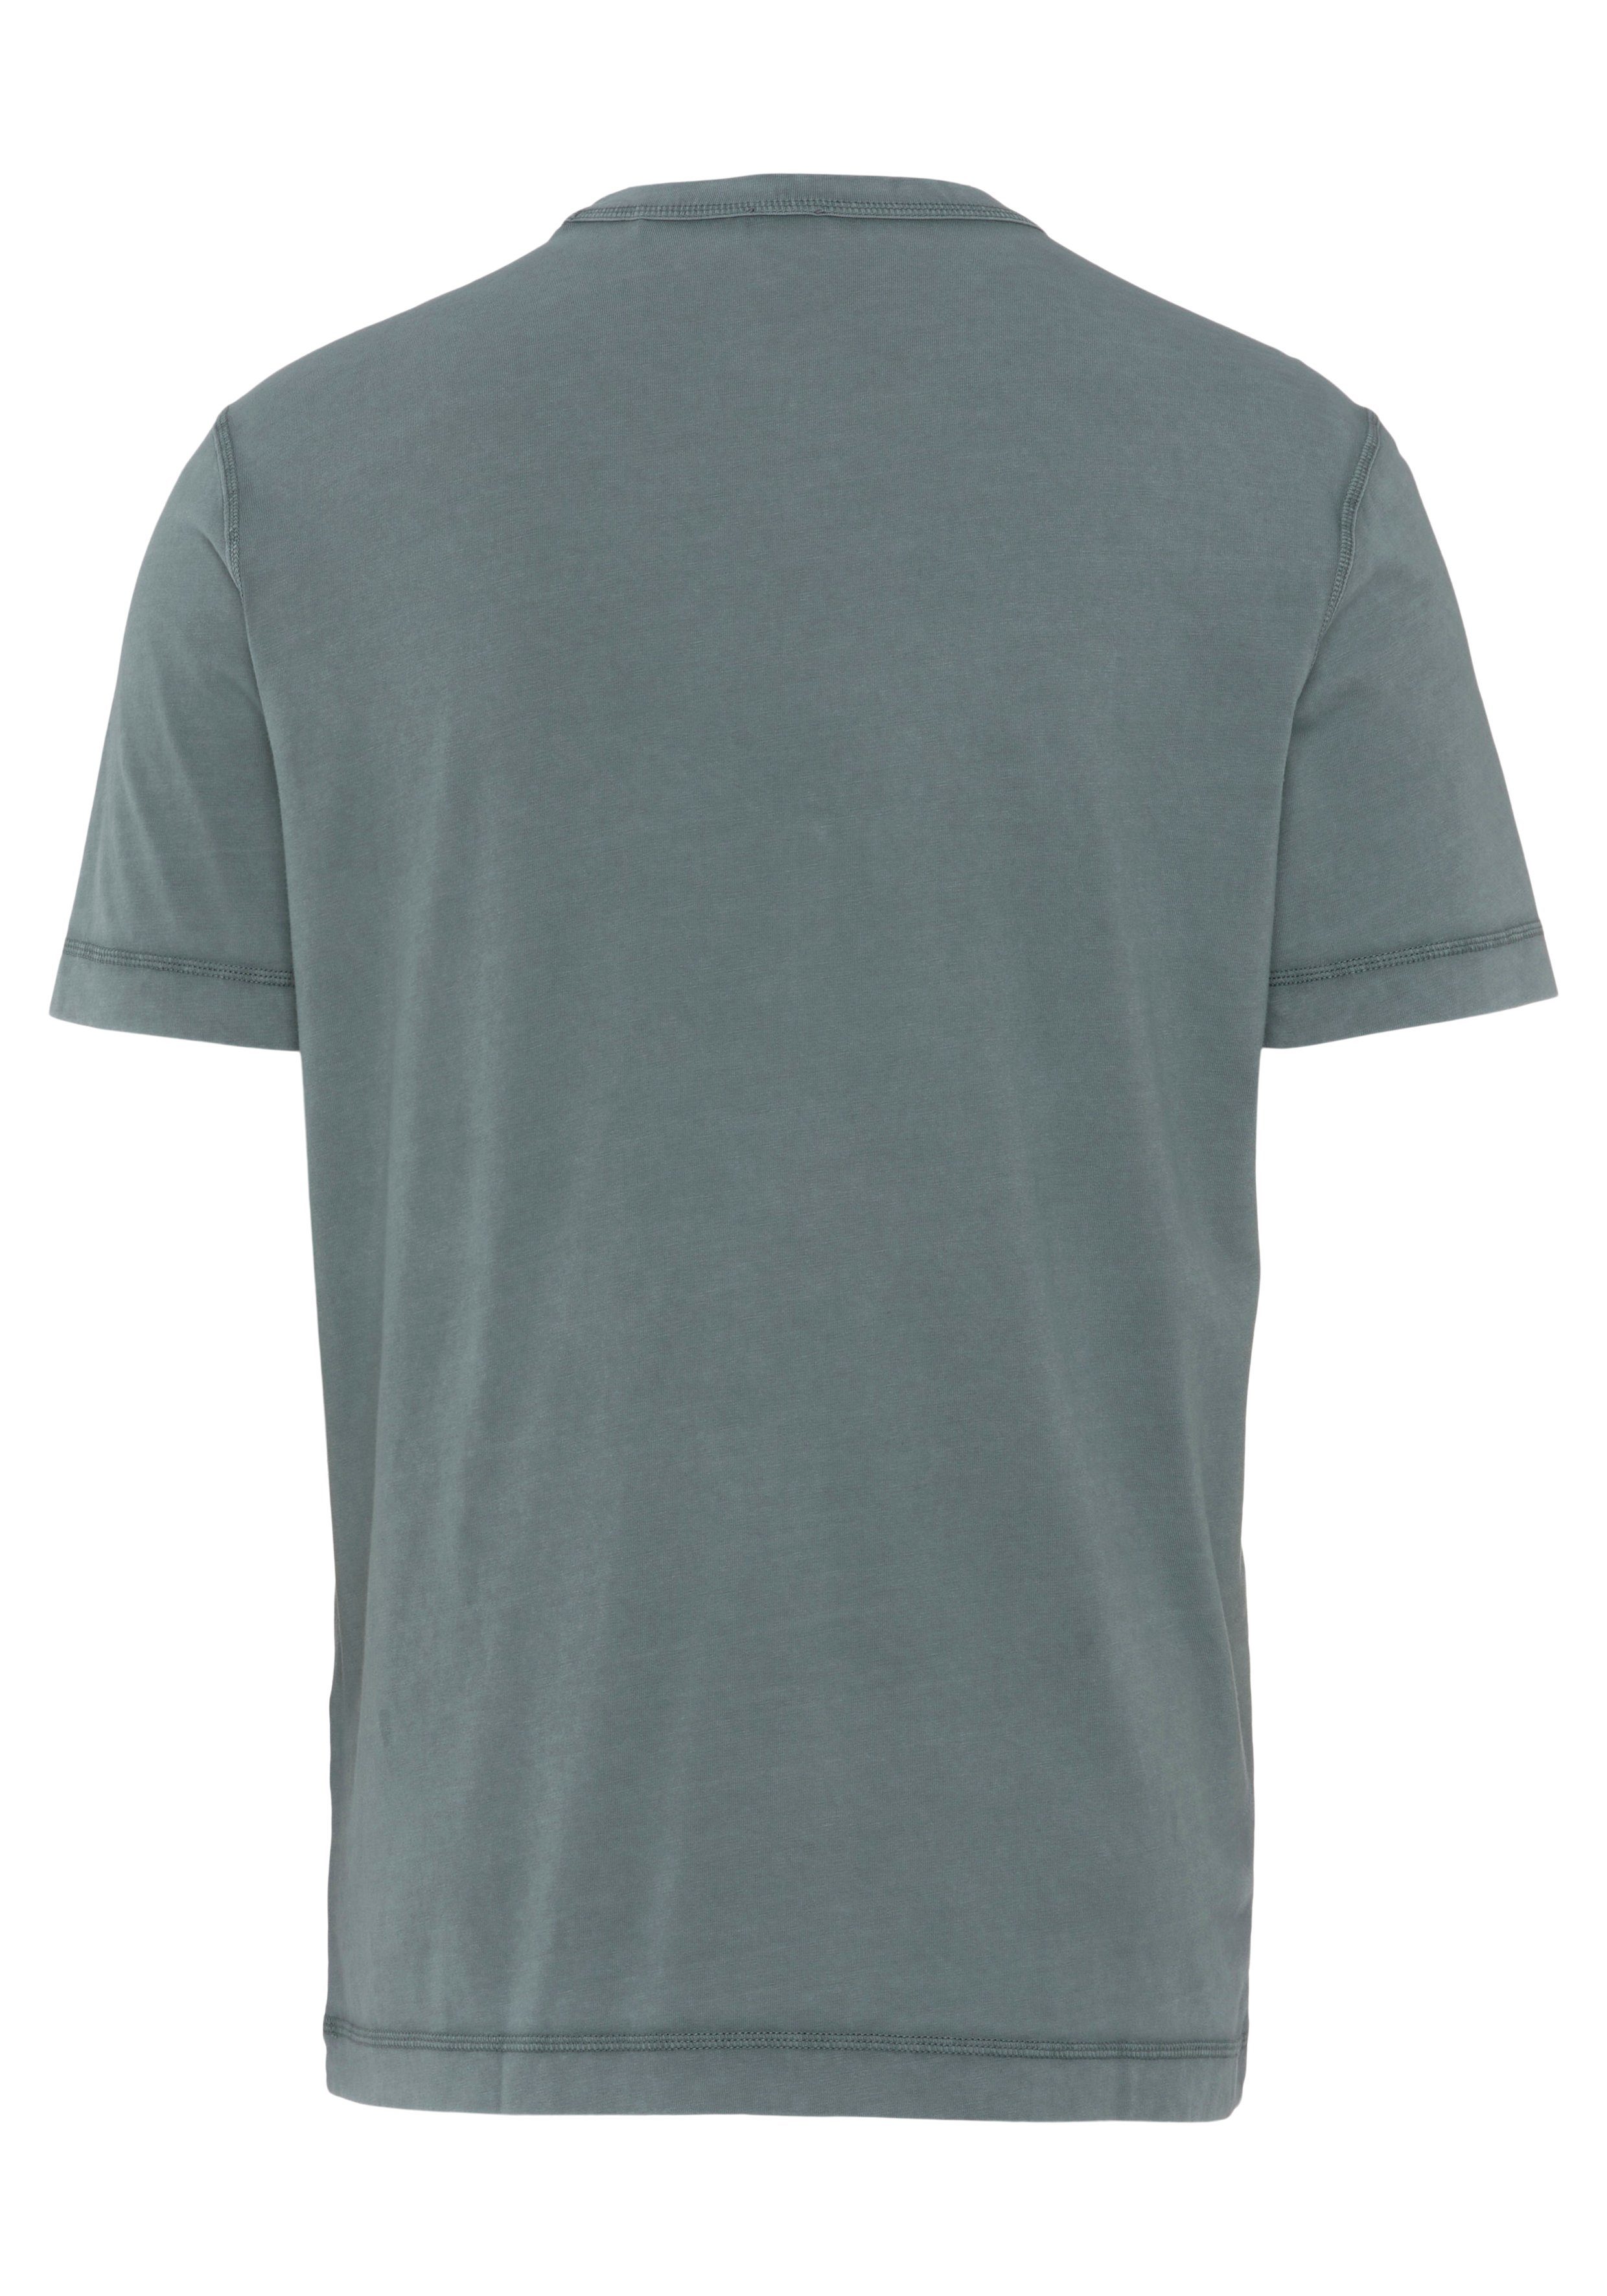 BOSS Markenlabel Open ORANGE mit T-Shirt Green375 Tokks ORANGE BOSS